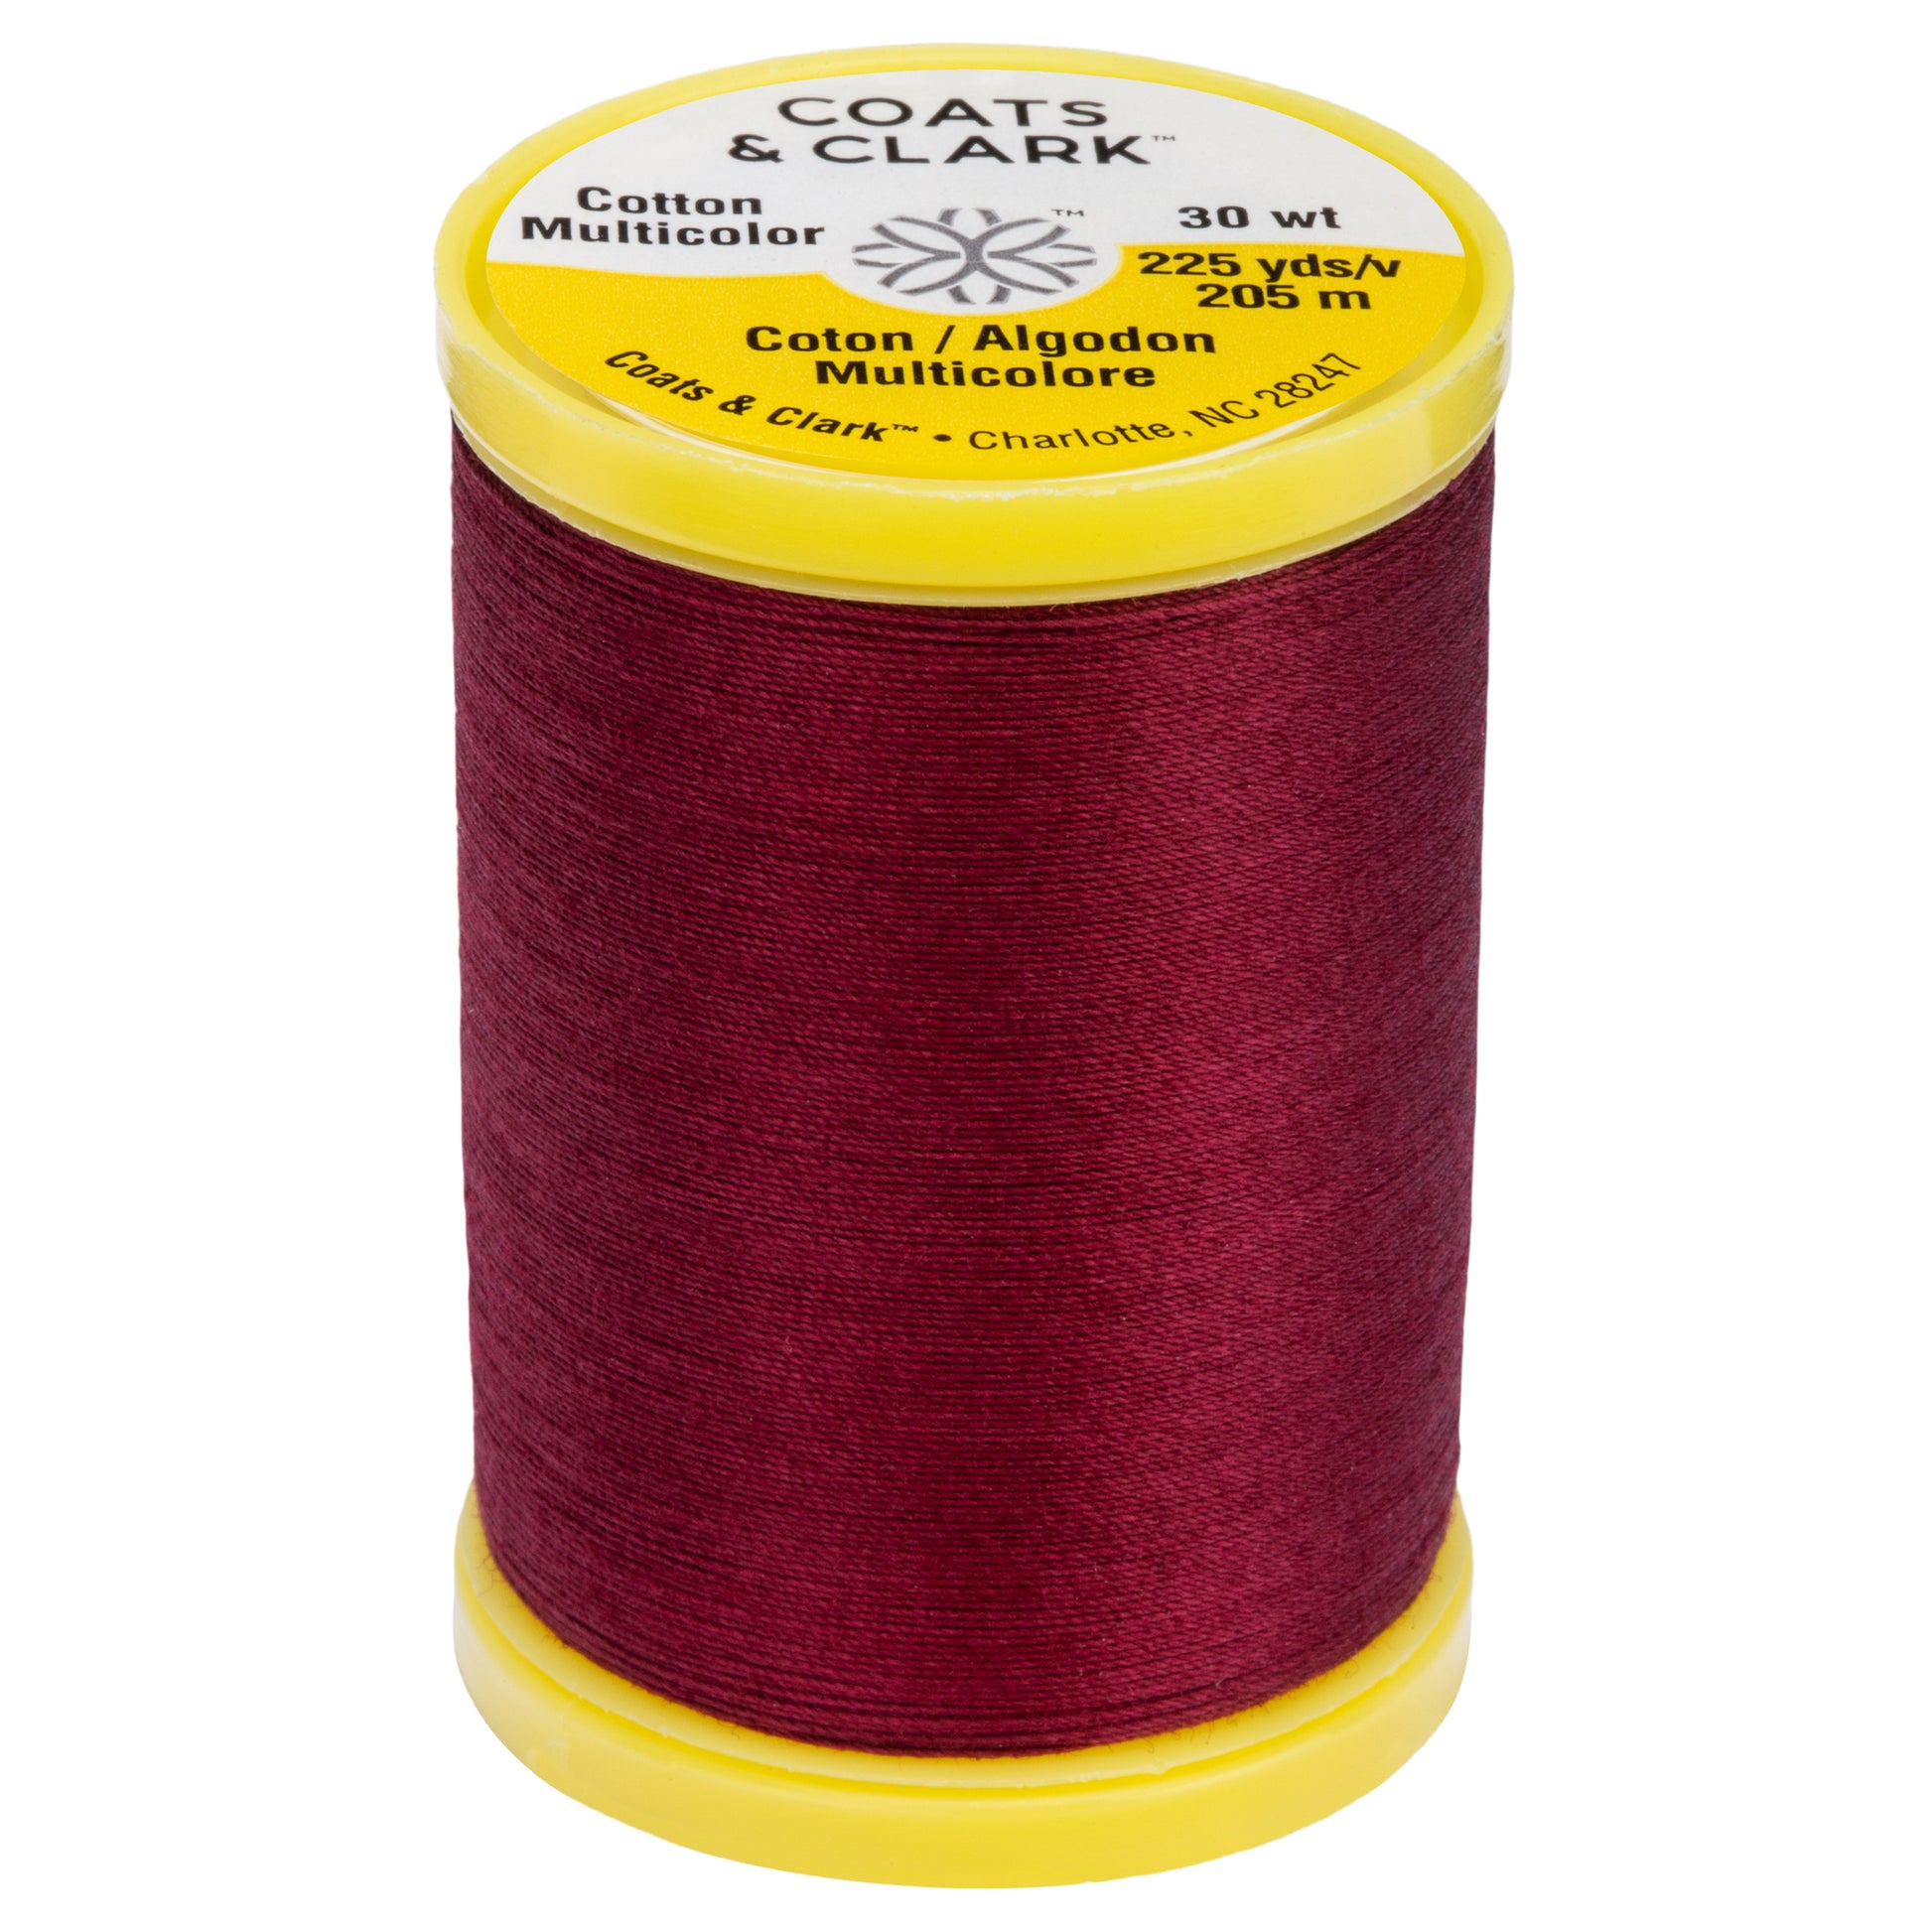 Coats & Clark Thread - Sewing Parts Online